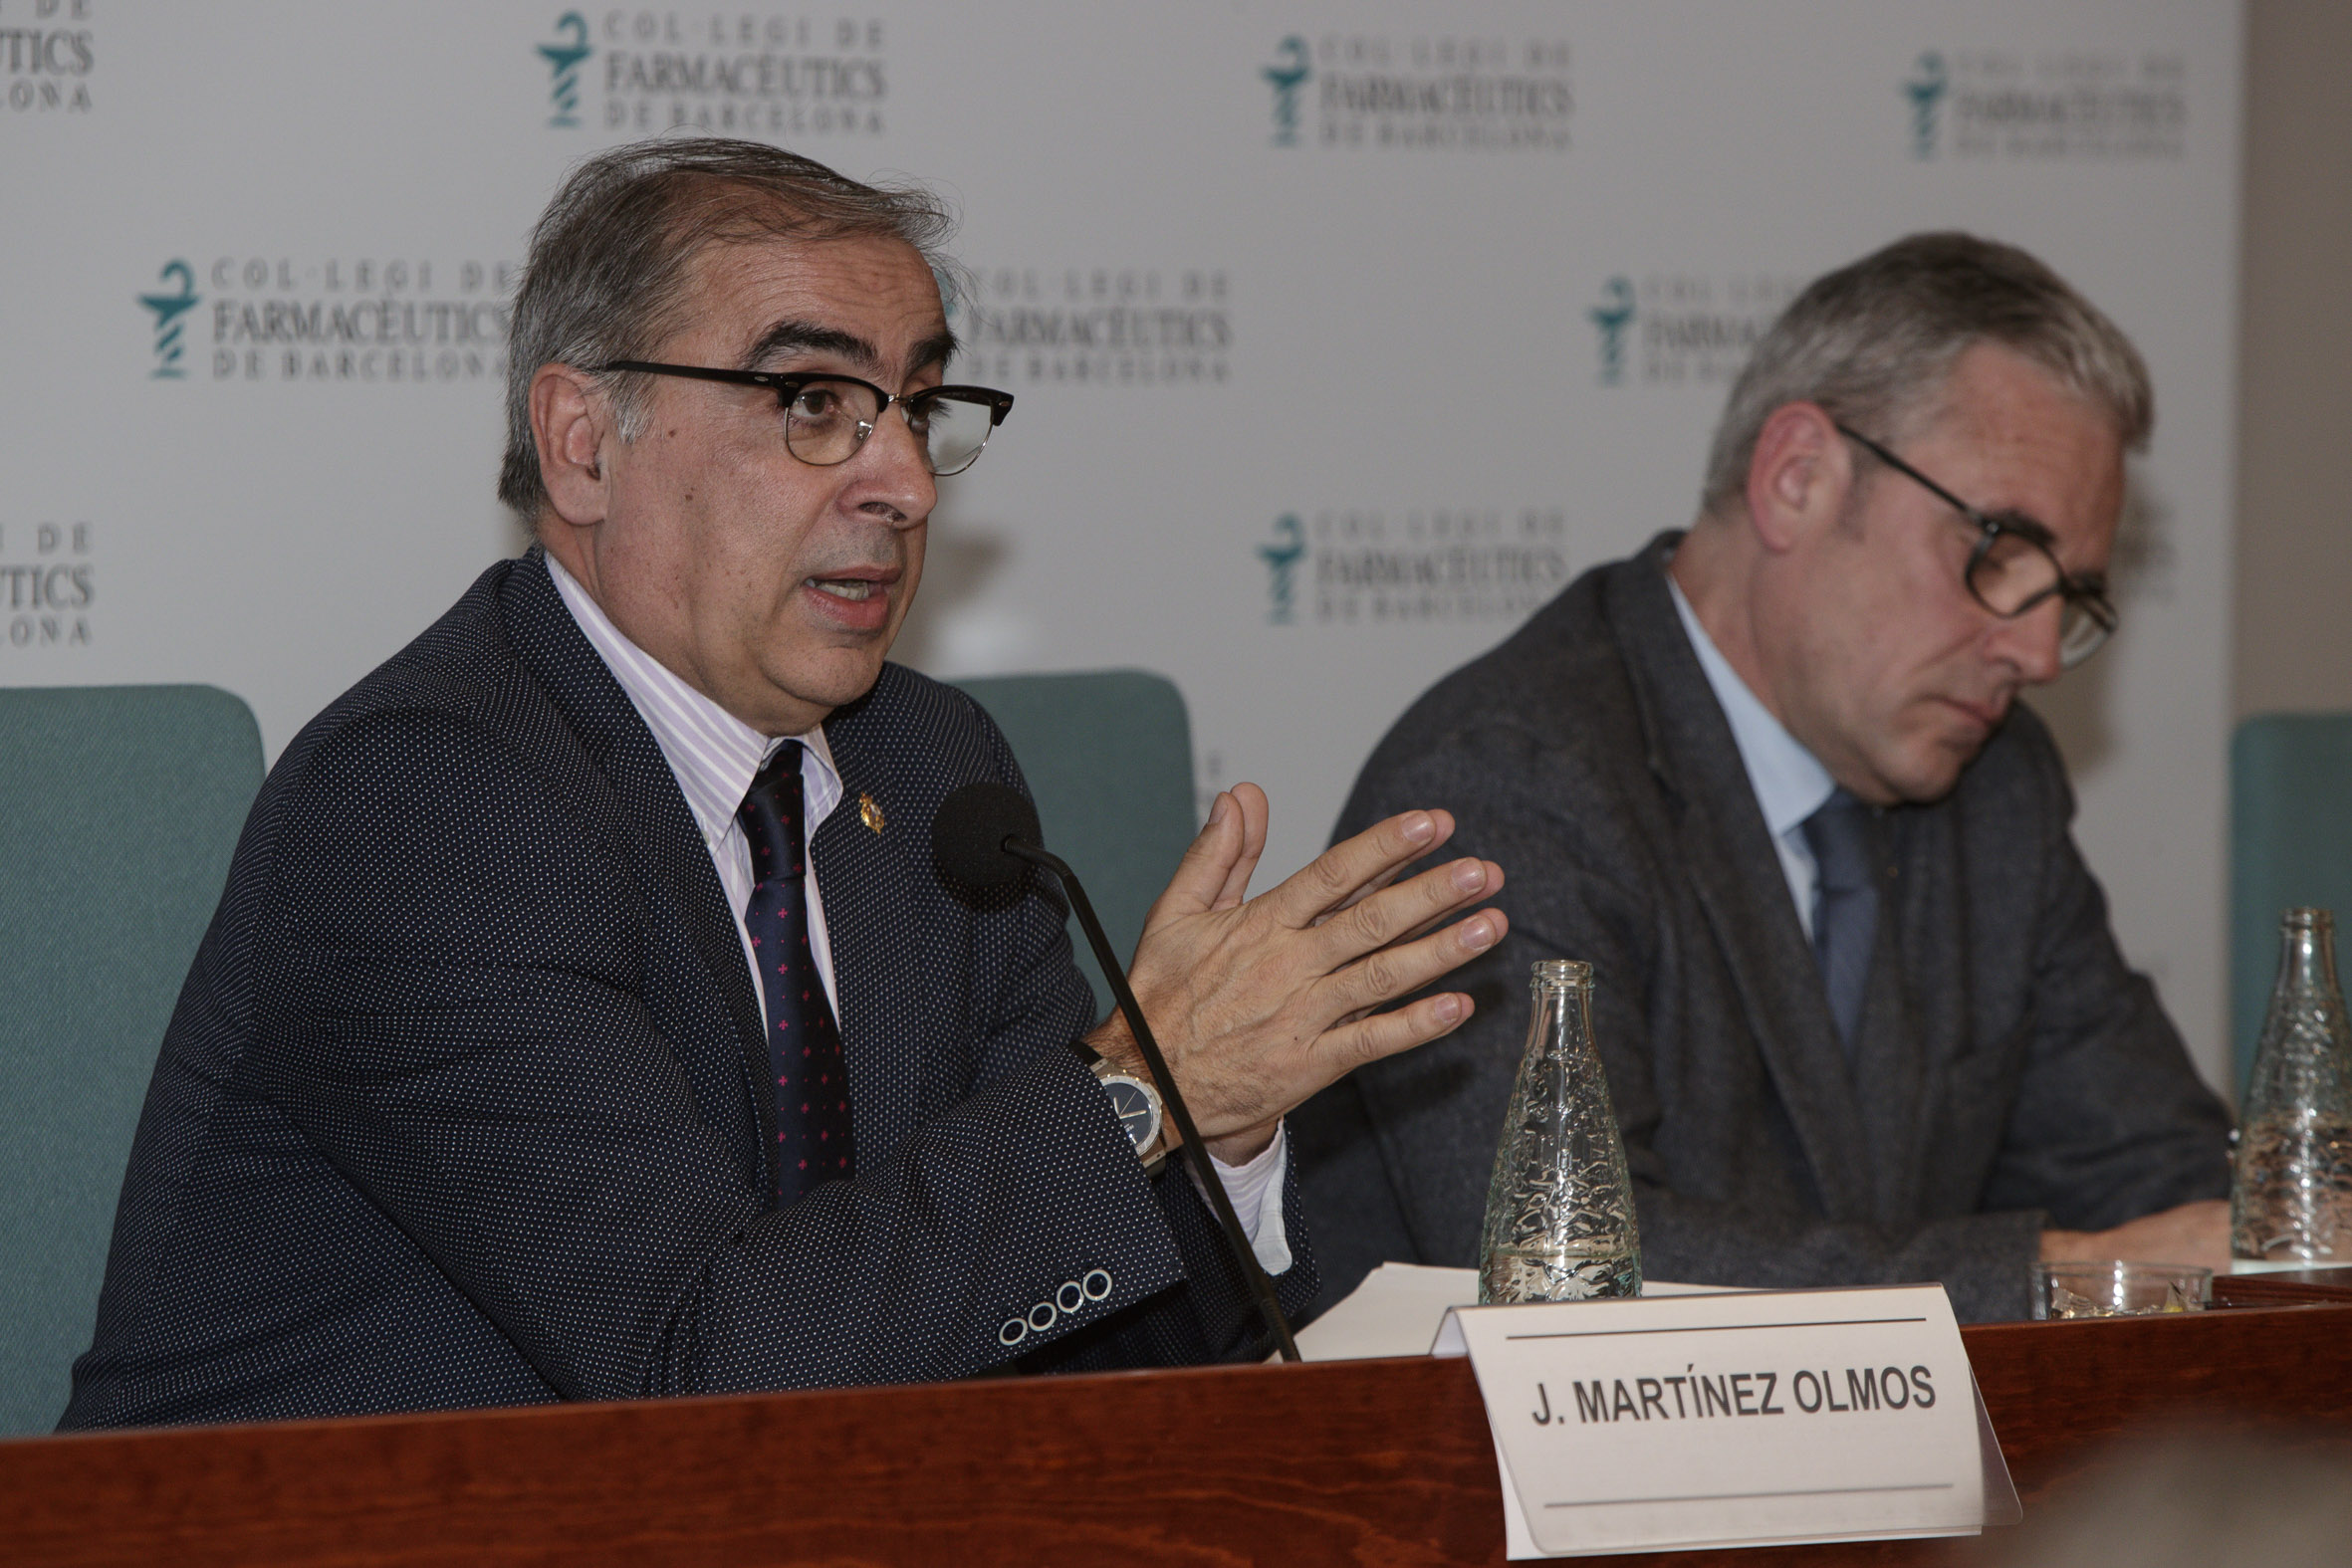 José Martínez Olmos i Jordi De Dalmases, durant la presentació del llibre "El futuro de la Sanidad en España".